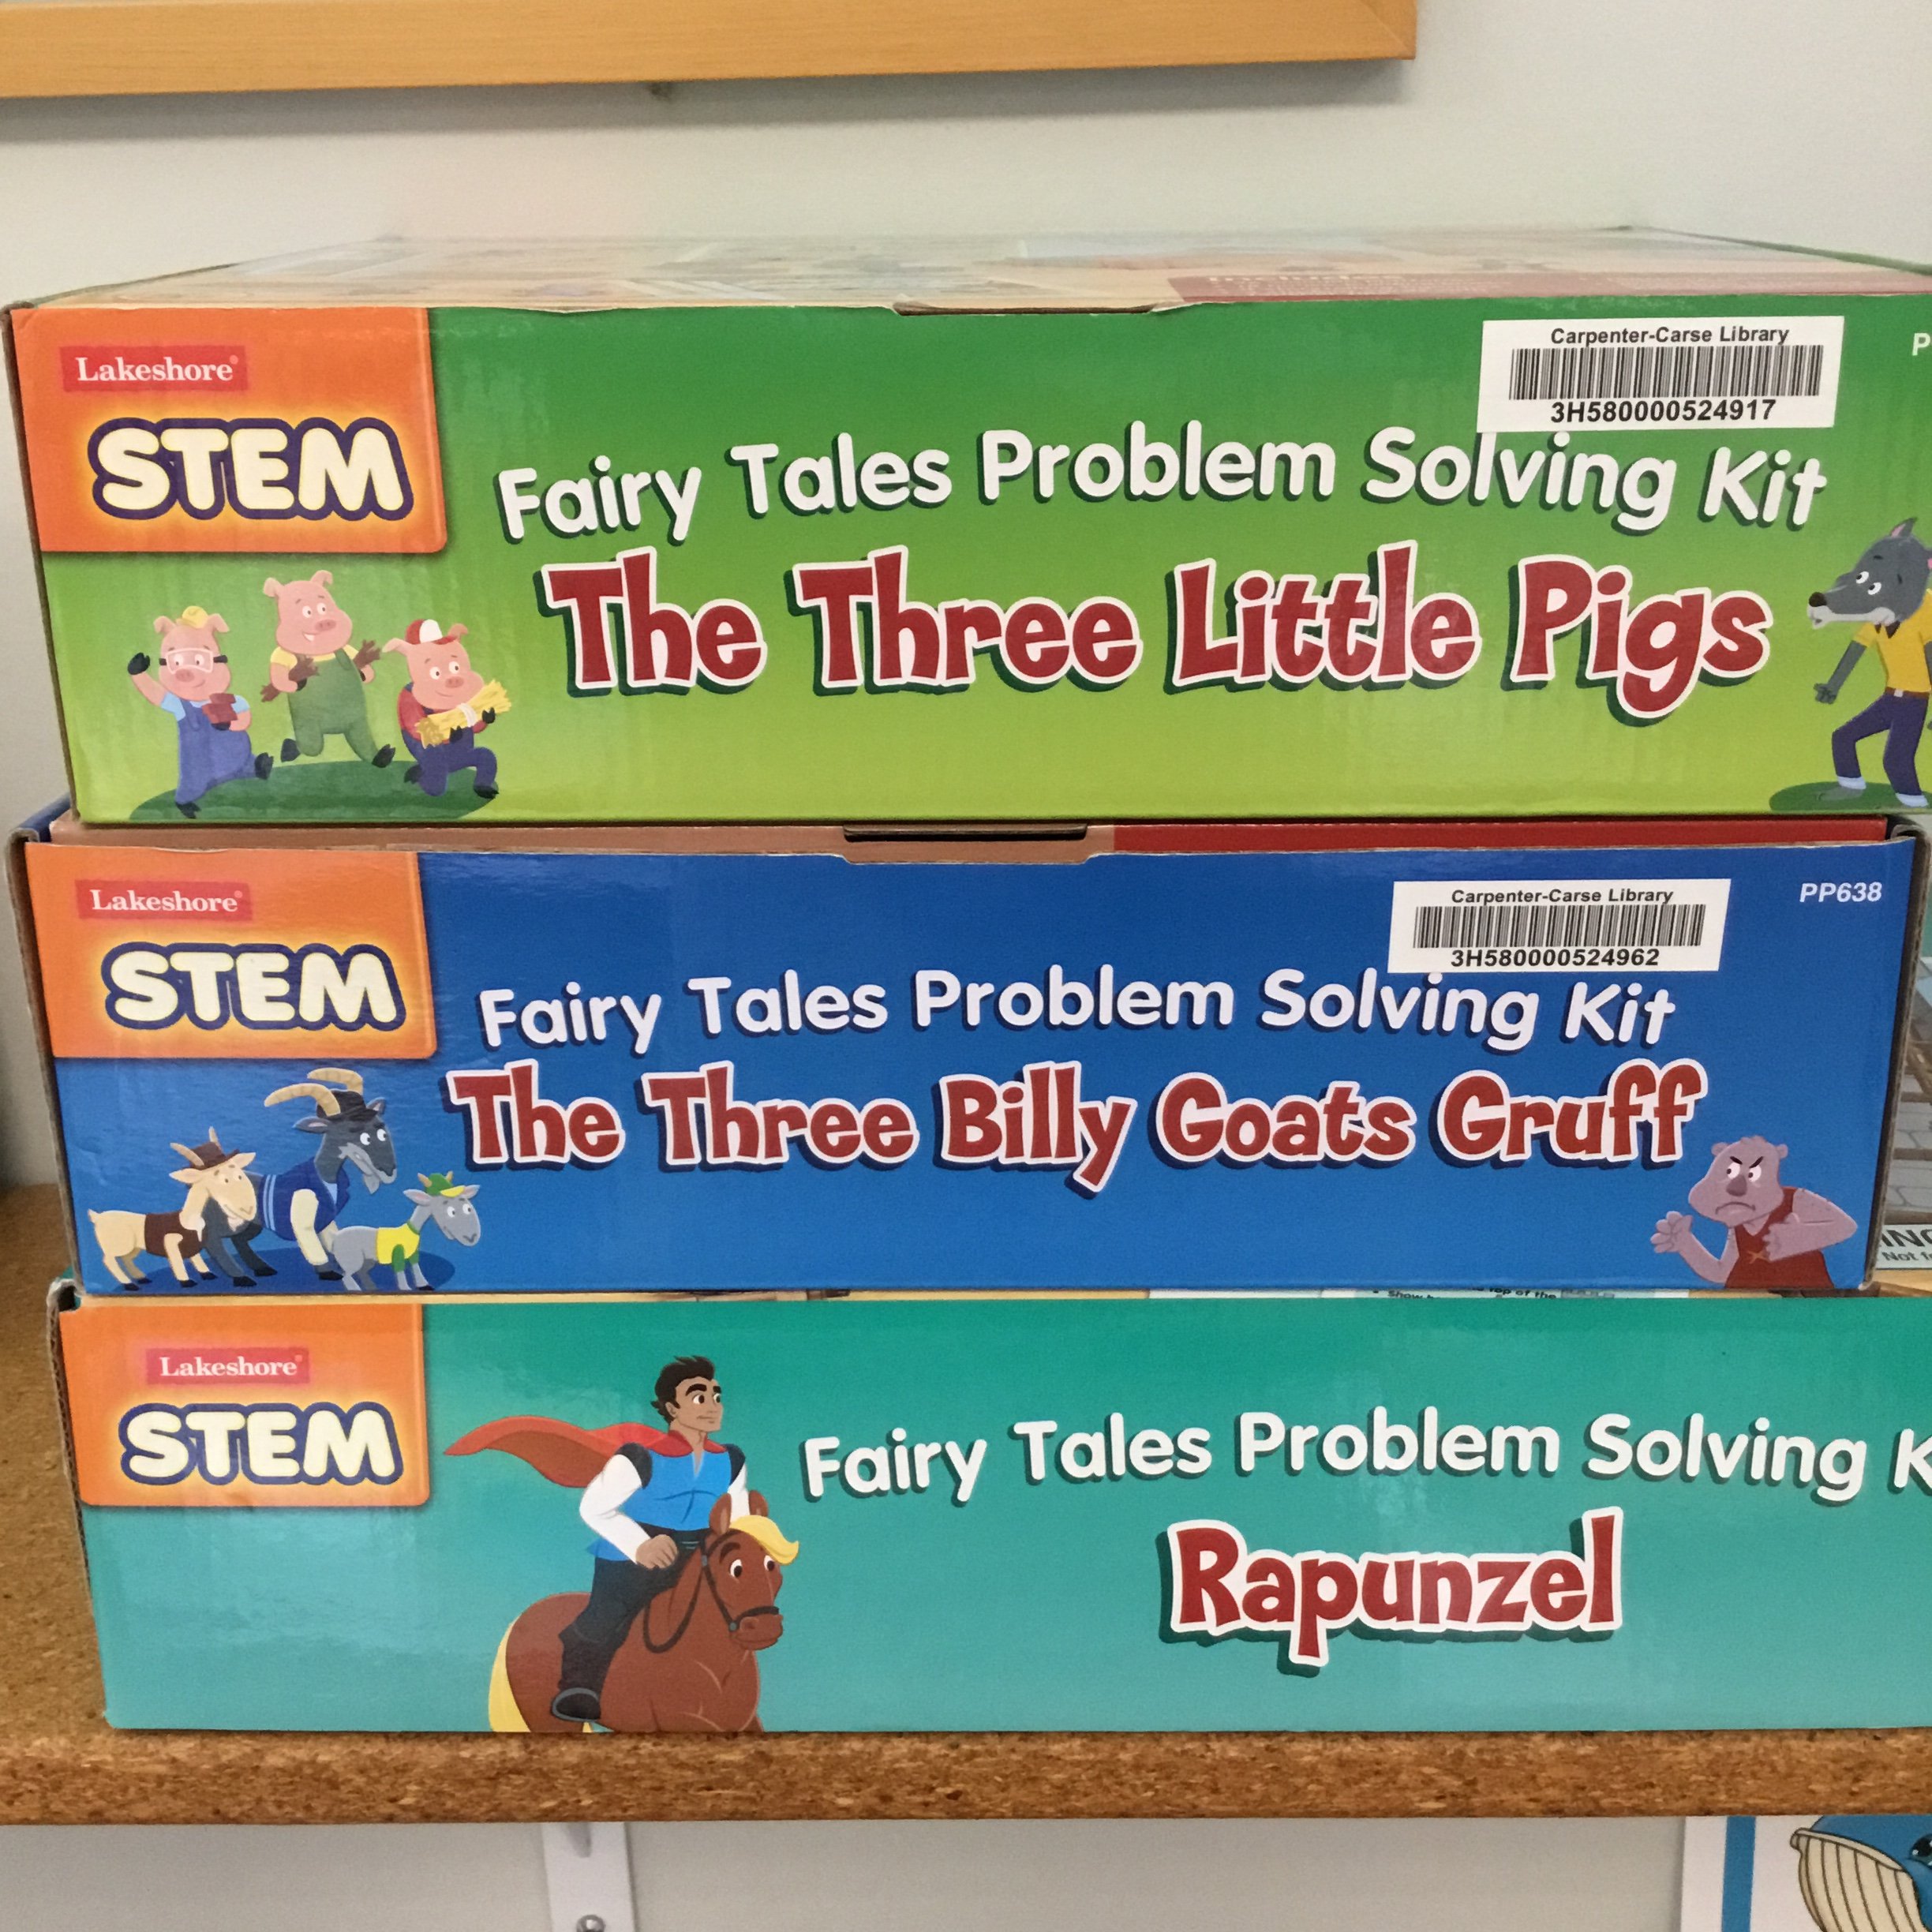 STEM Learning Kits